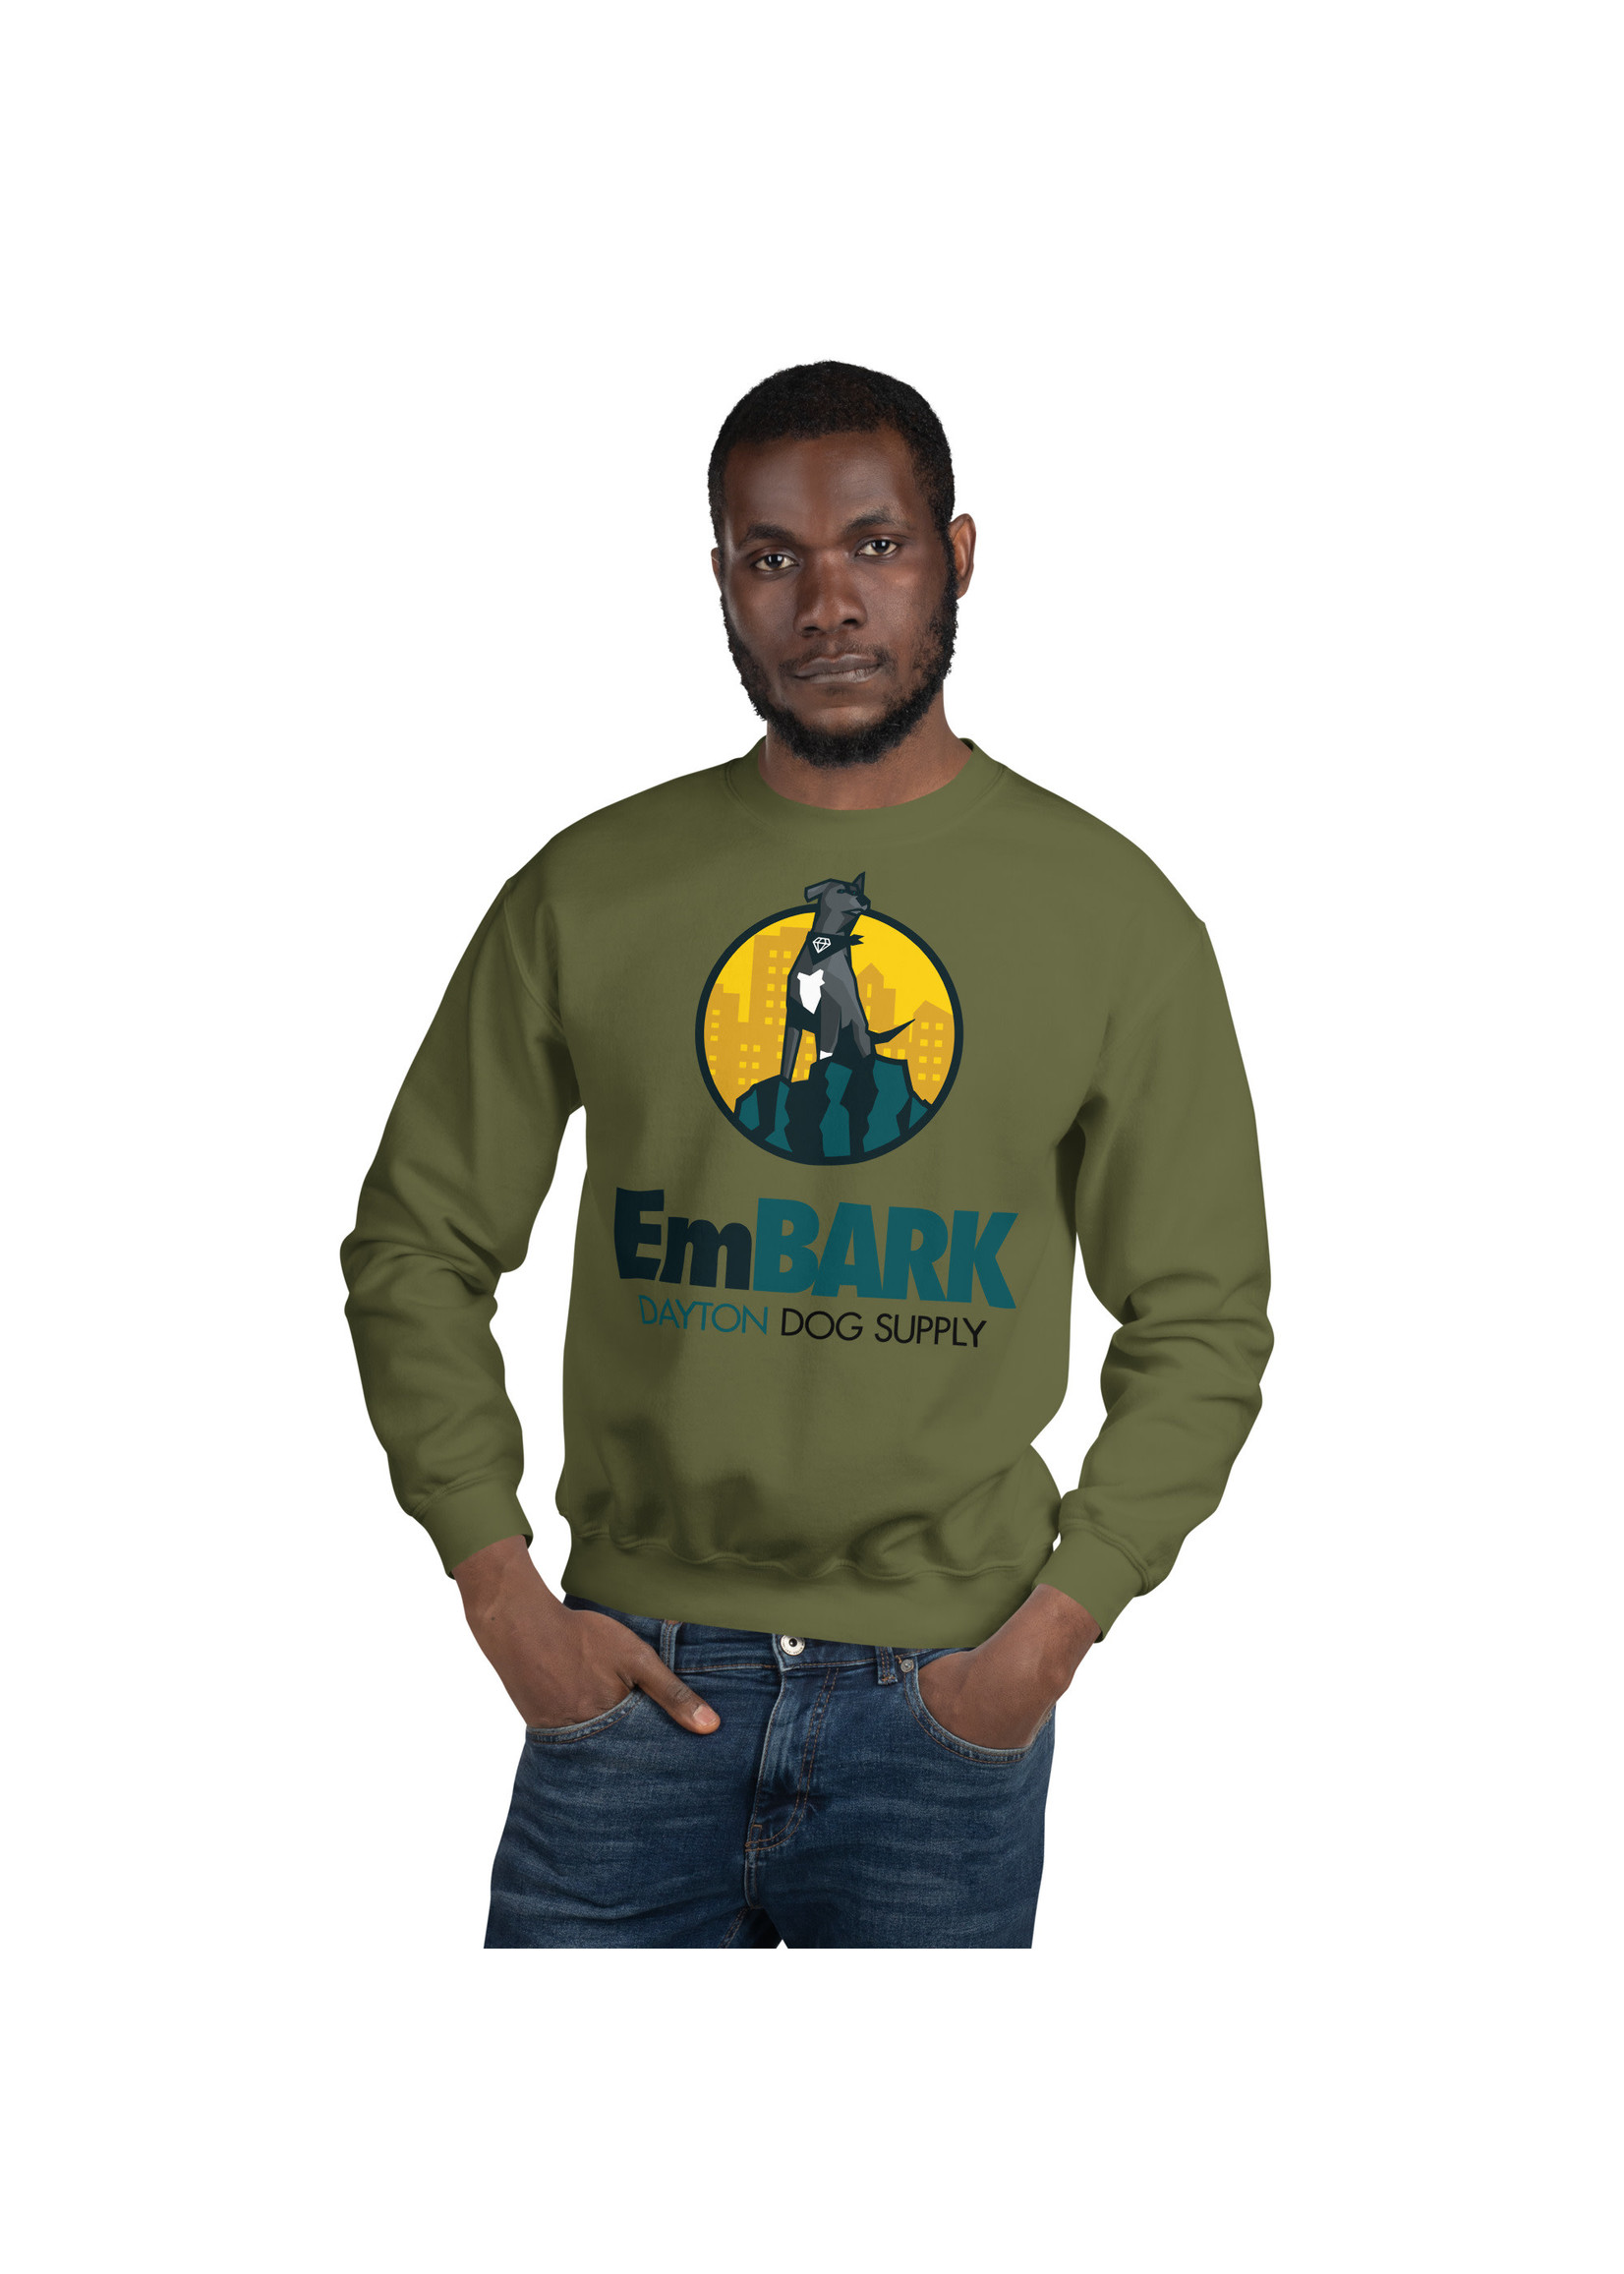 EmBARK Dayton Dog Supply Sweatshirts